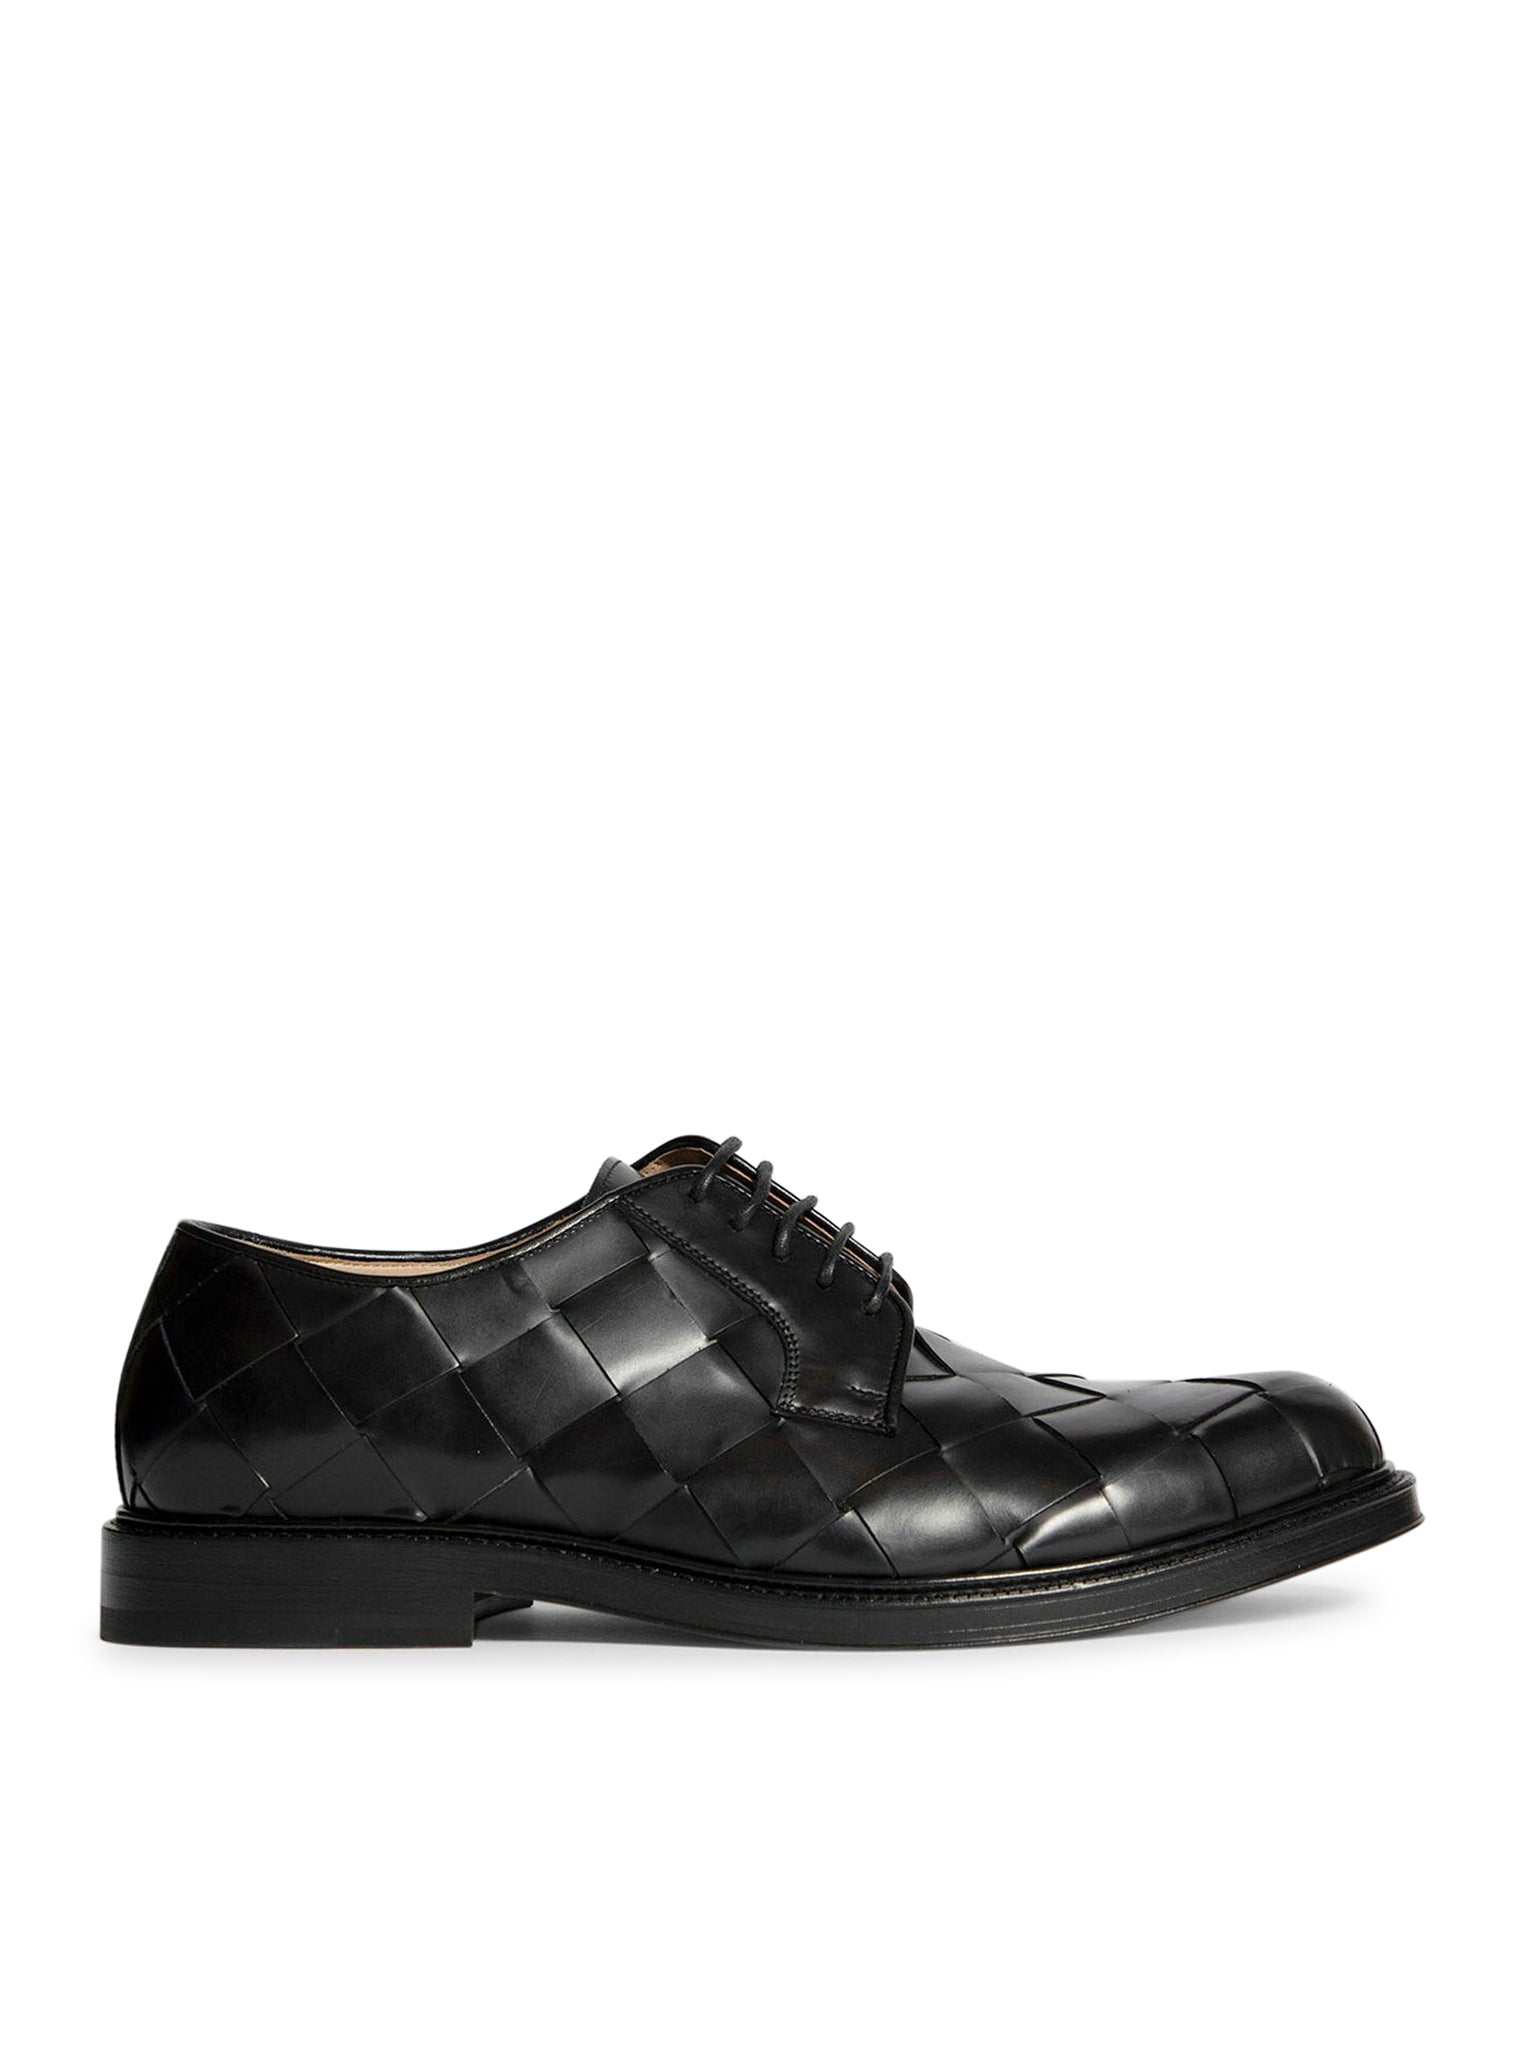 Bottega veneta men`s black woven leather lace-up shoes in classic calfskin